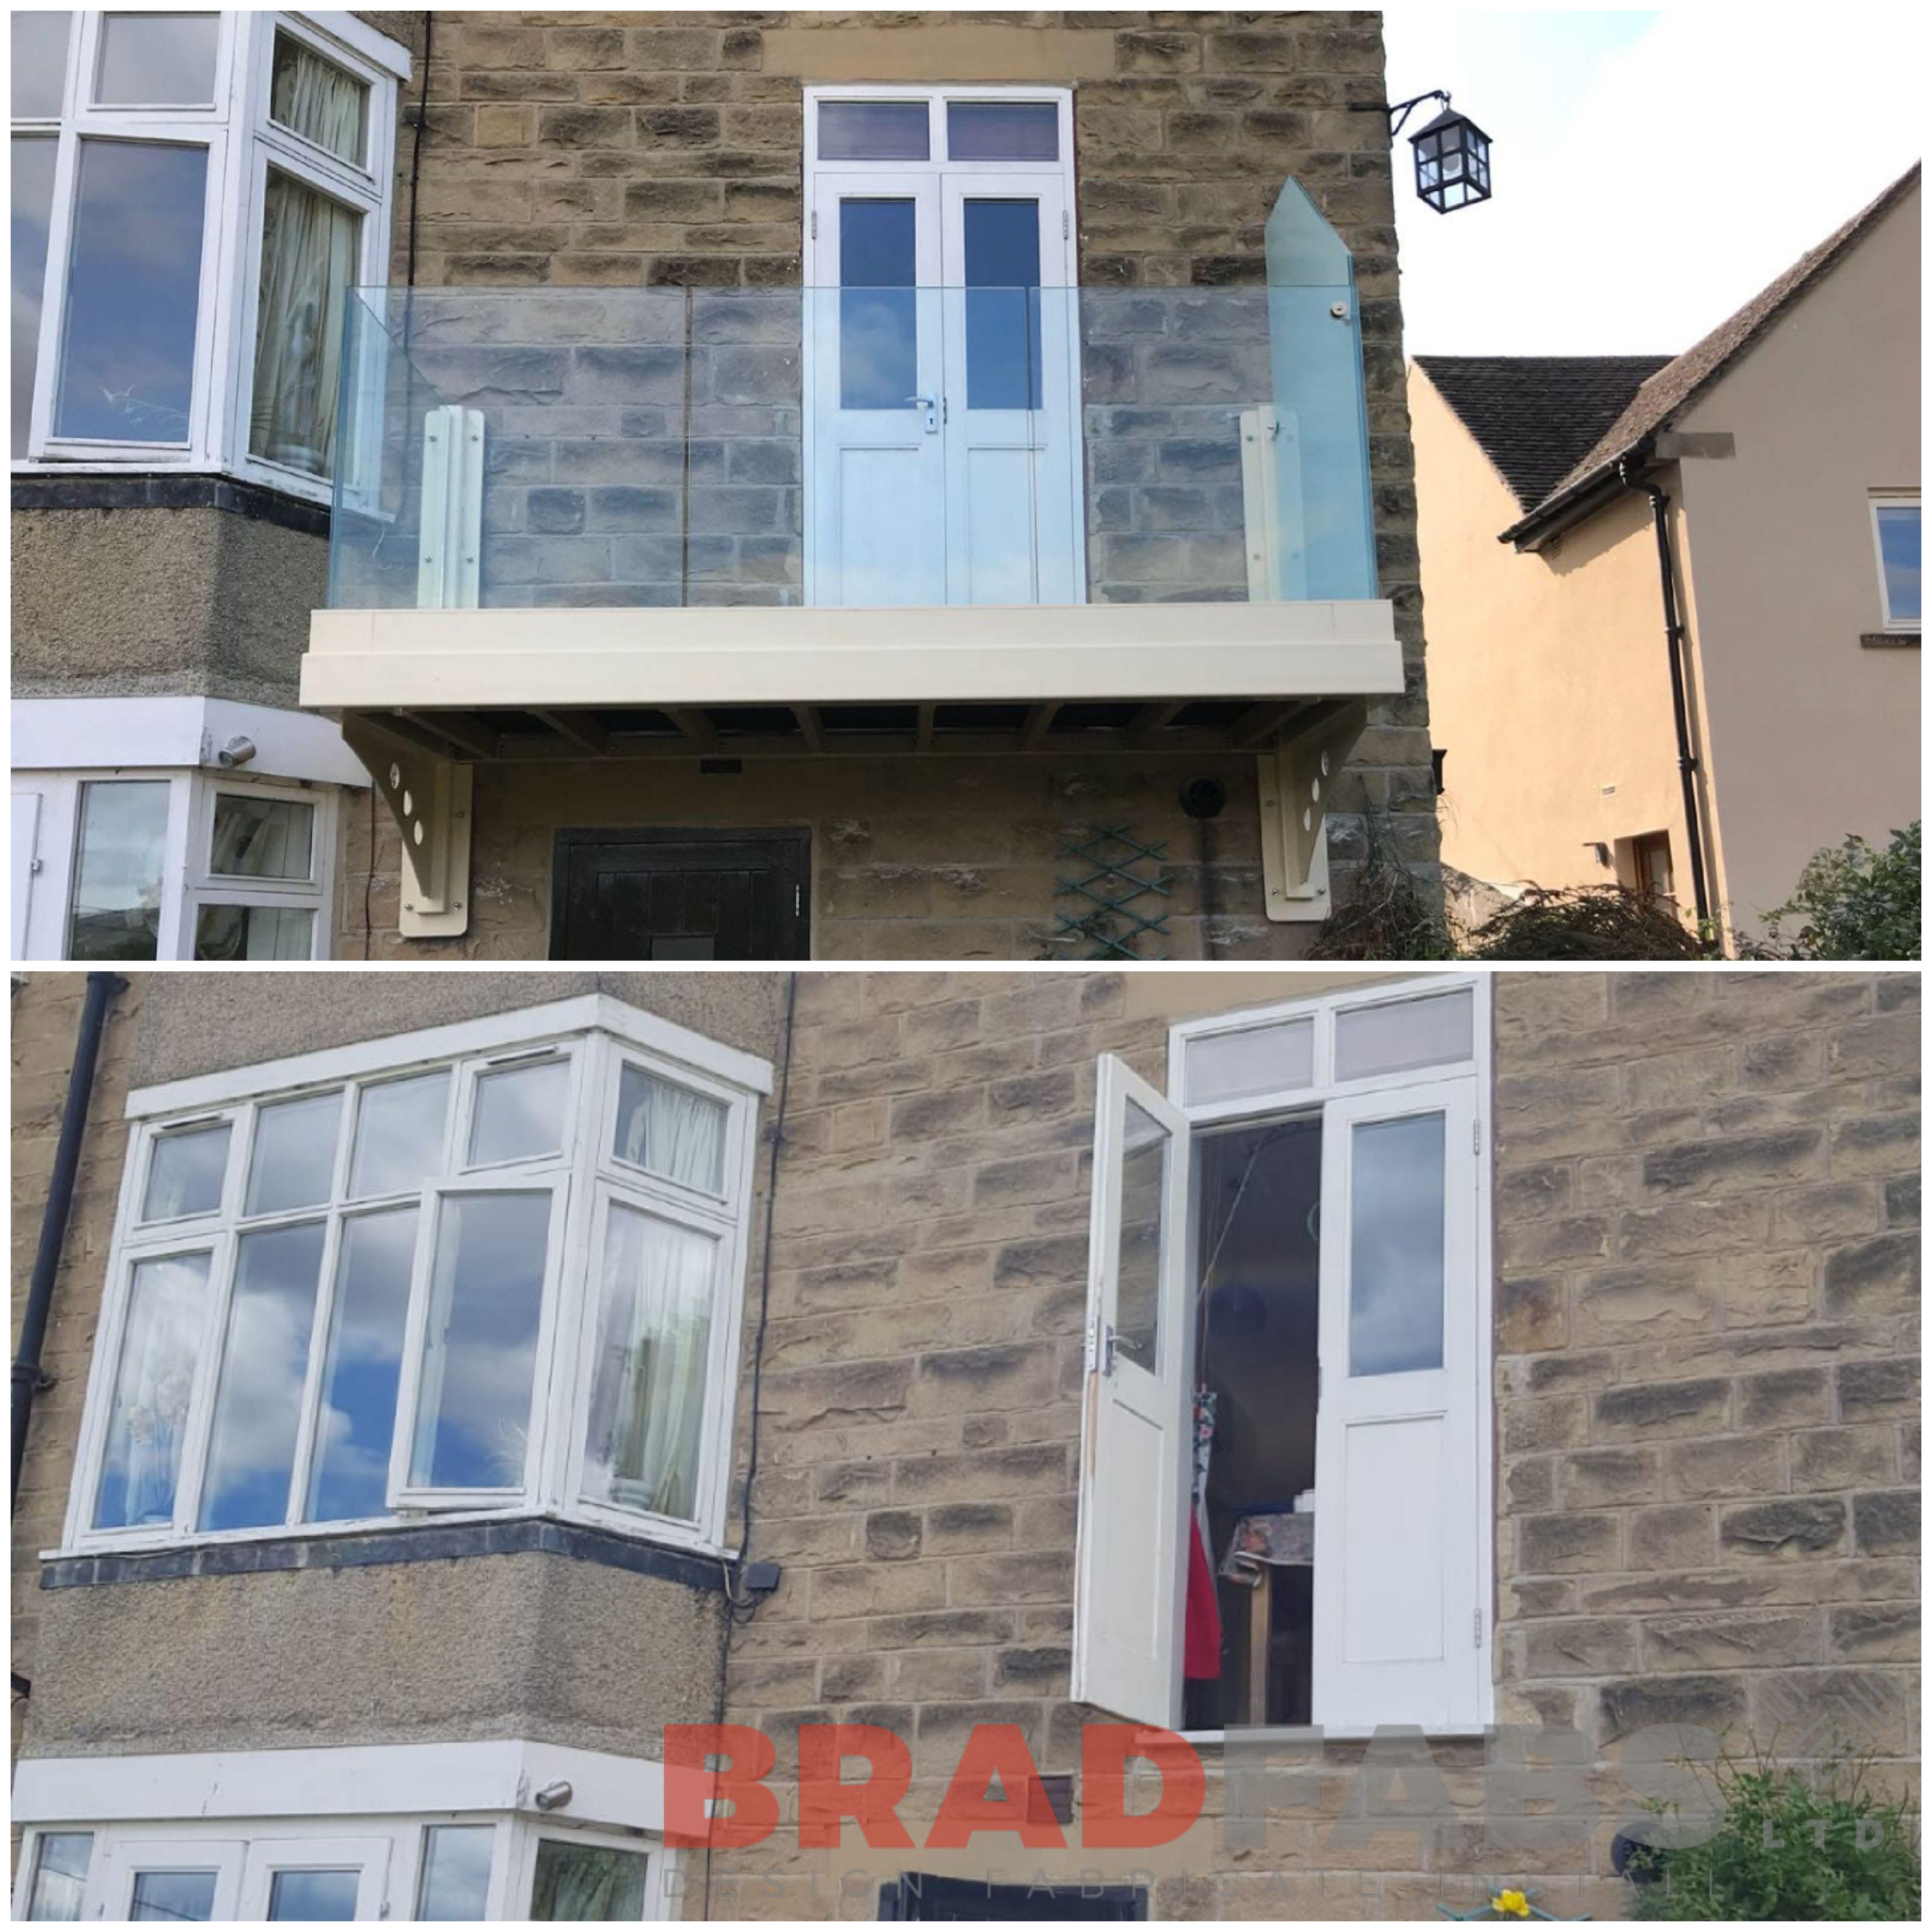 Transformation, Balcony transformation, Bradfabs, outdoor home improvements 